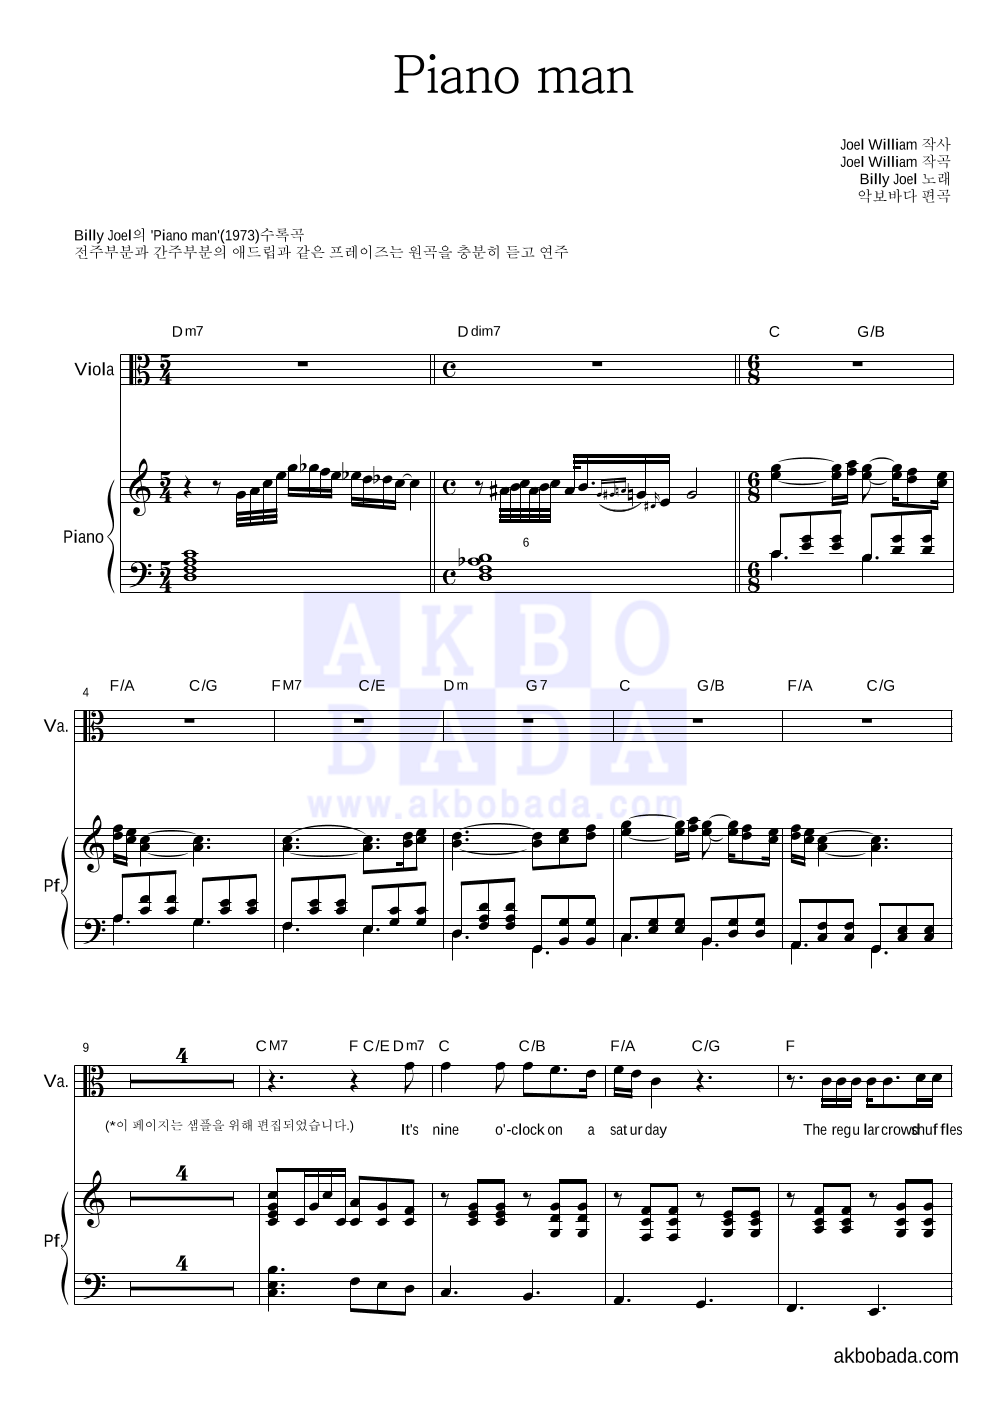 Billy Joel - Piano man 비올라&피아노 악보 